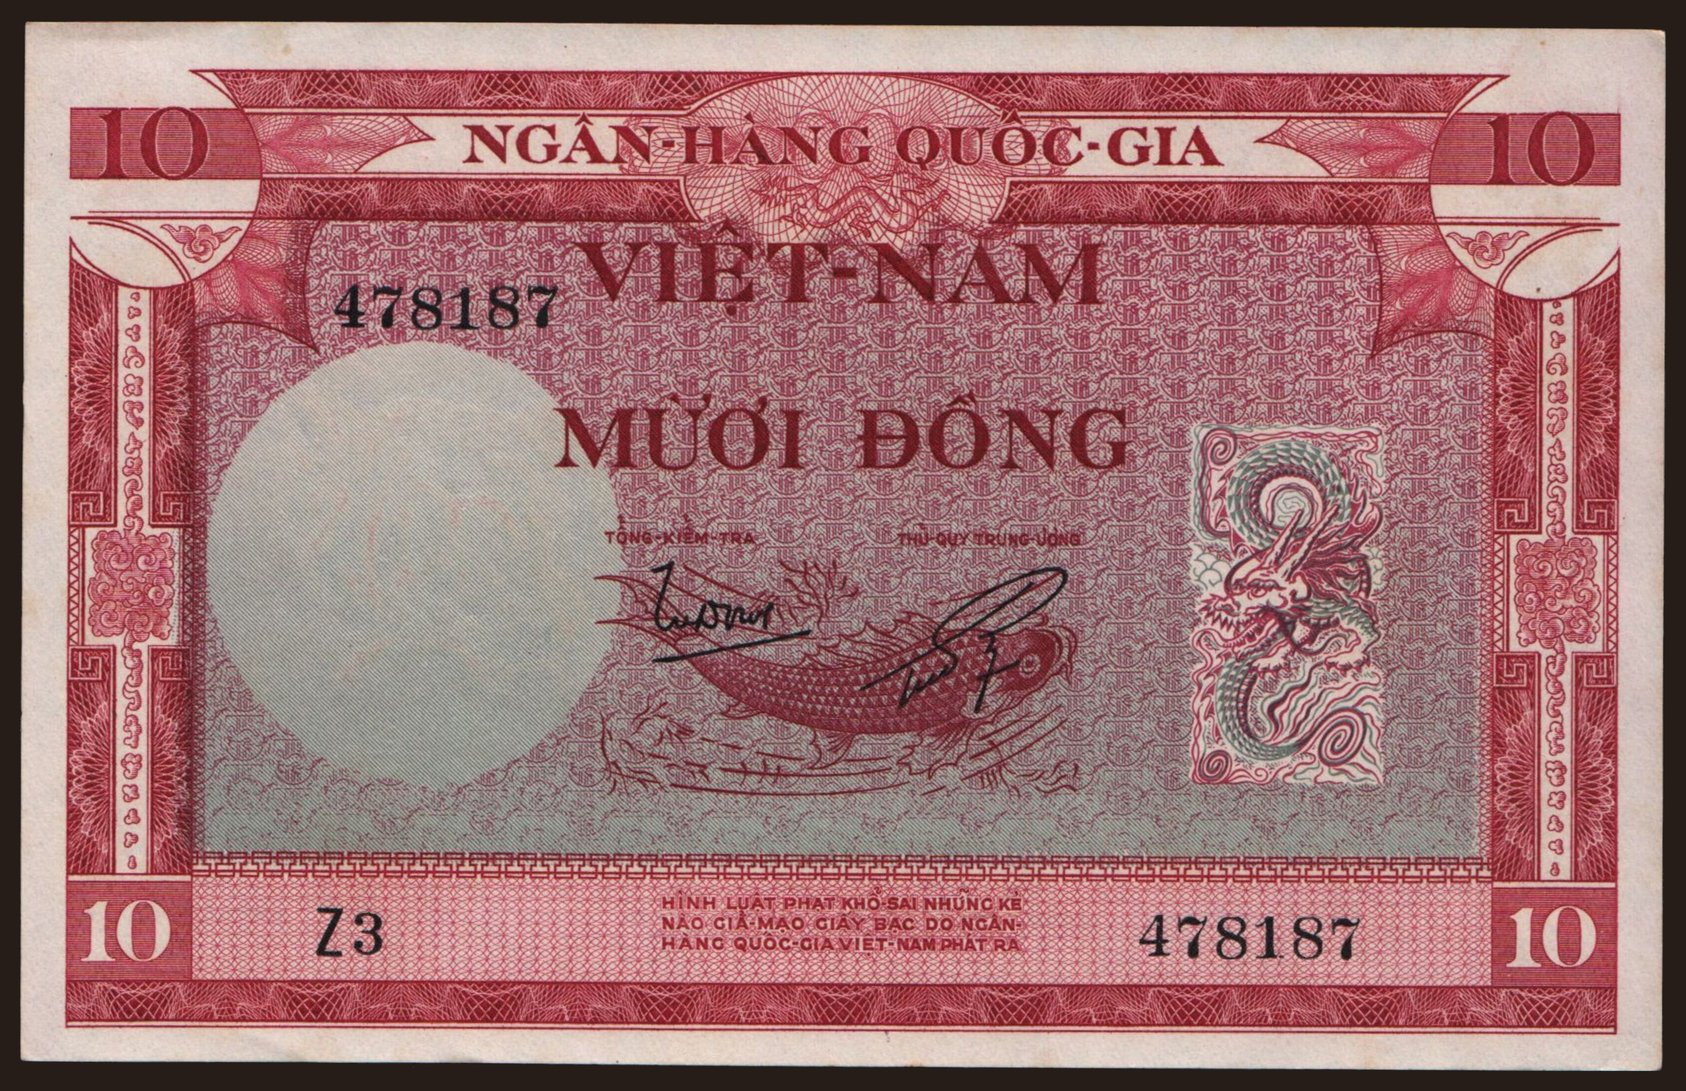 10 dong, 1955